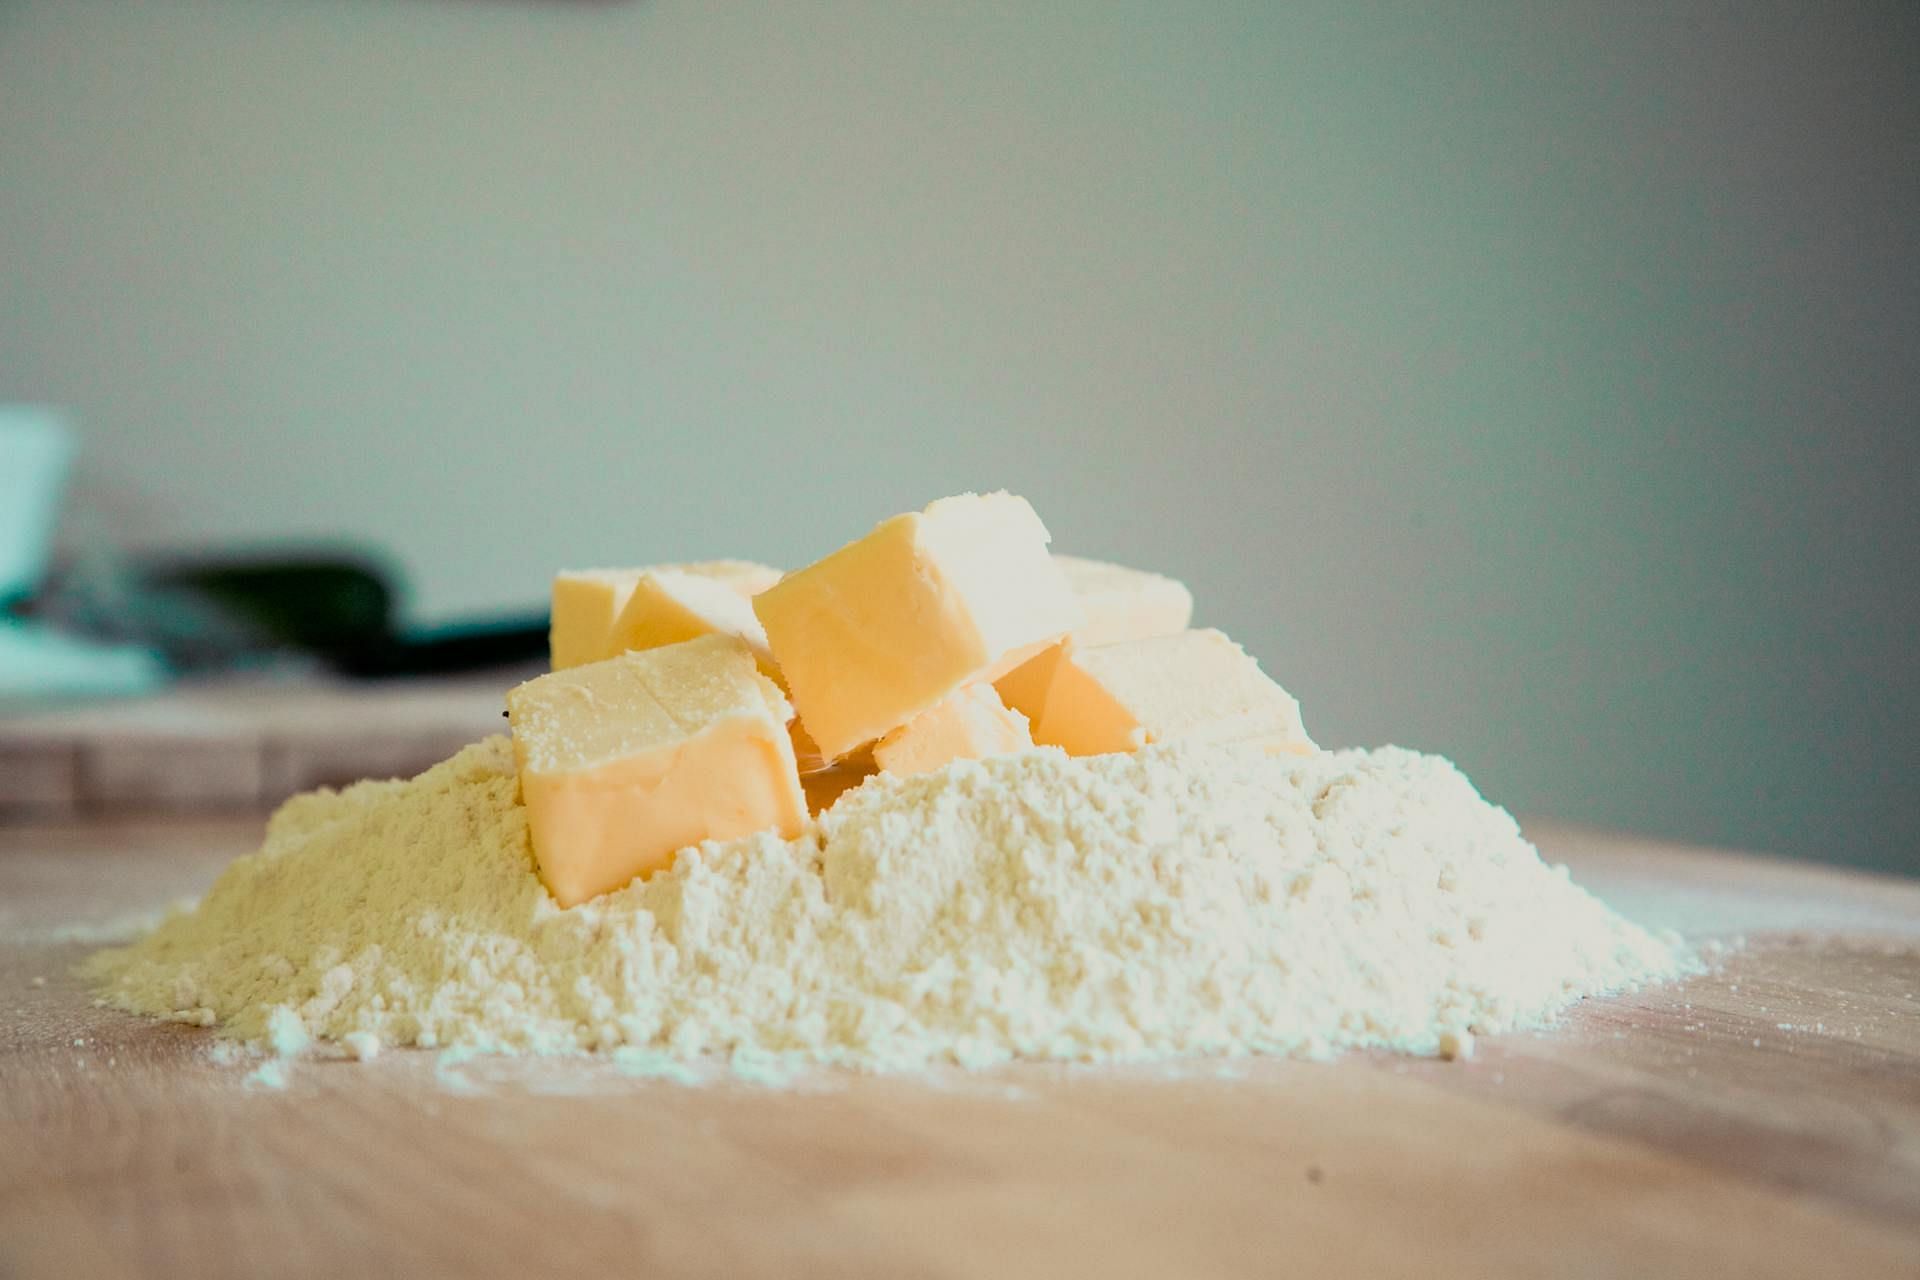 Eating butter too much can have negative health benefits (Image via Pexels/Markus Spiske)